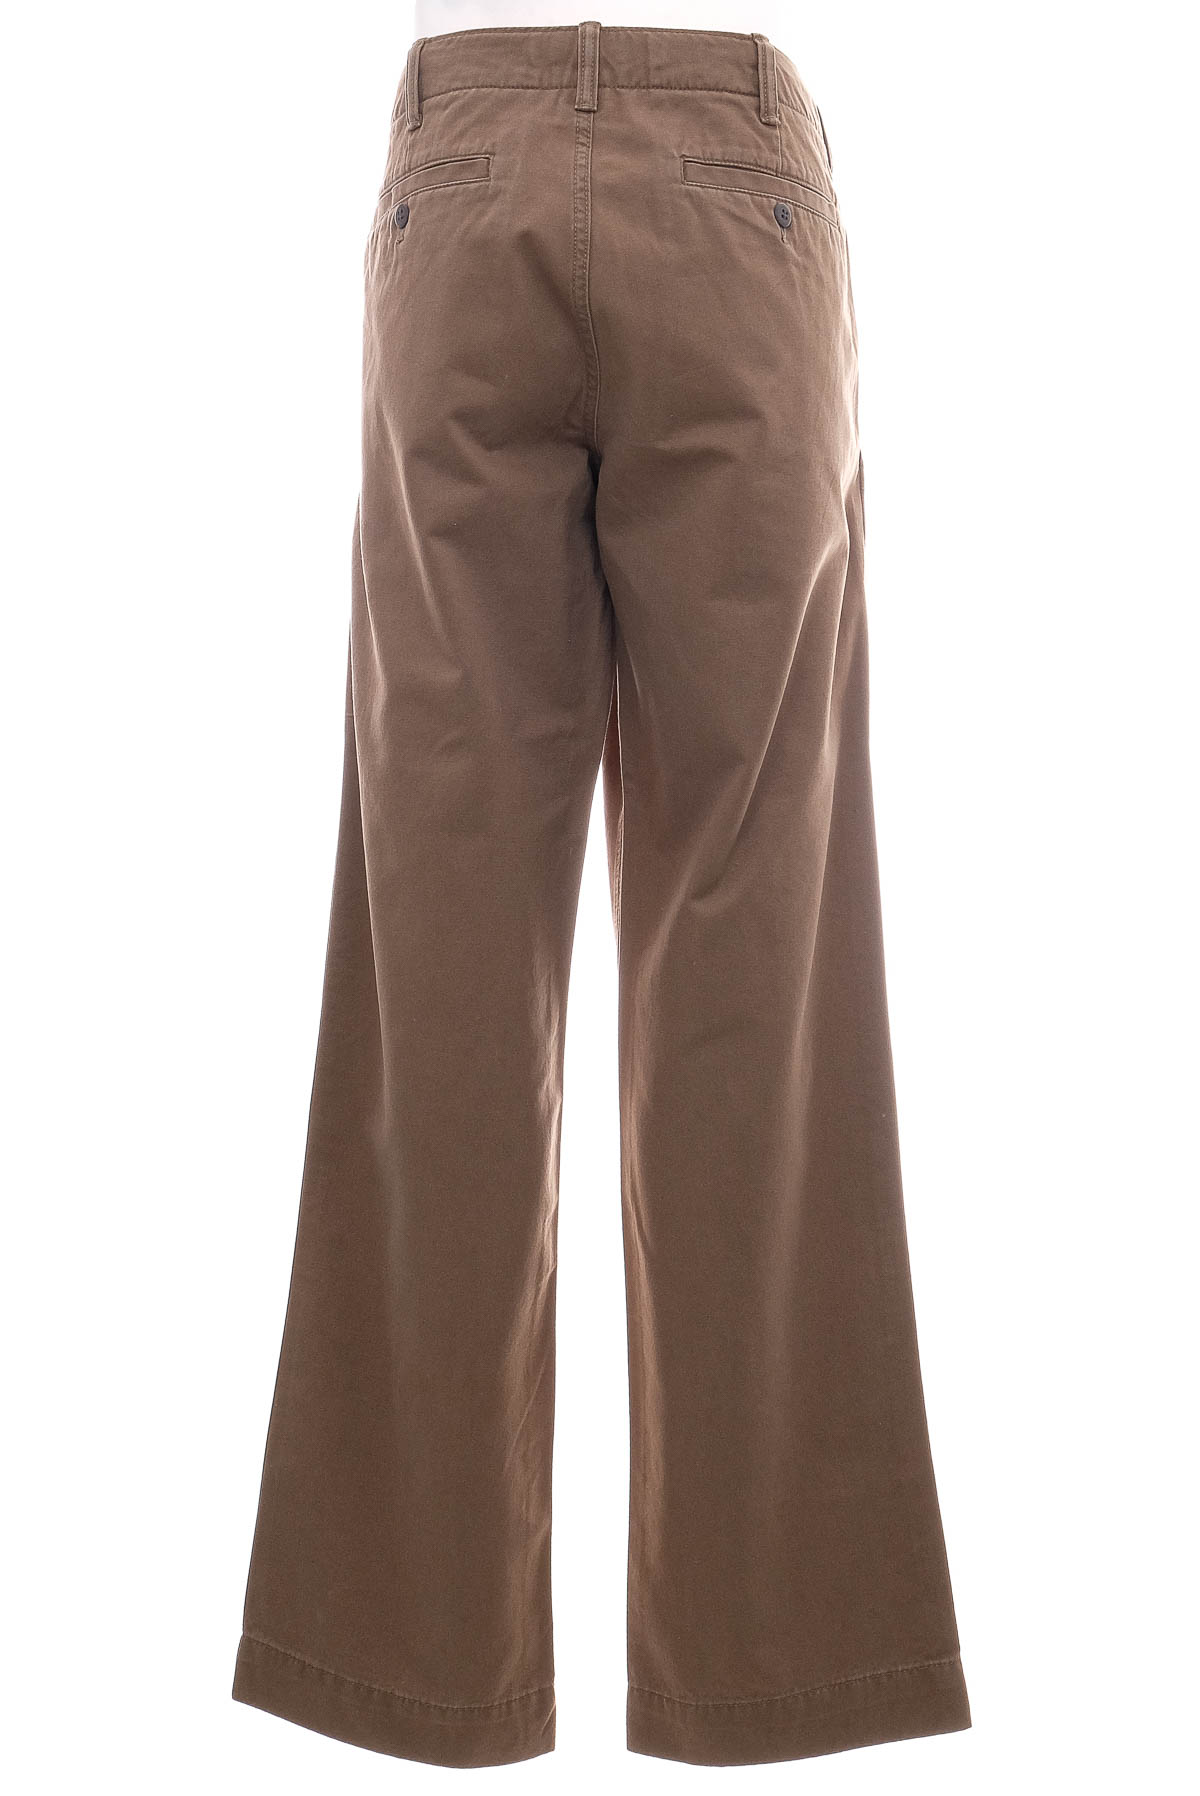 Men's trousers - GAP - 1